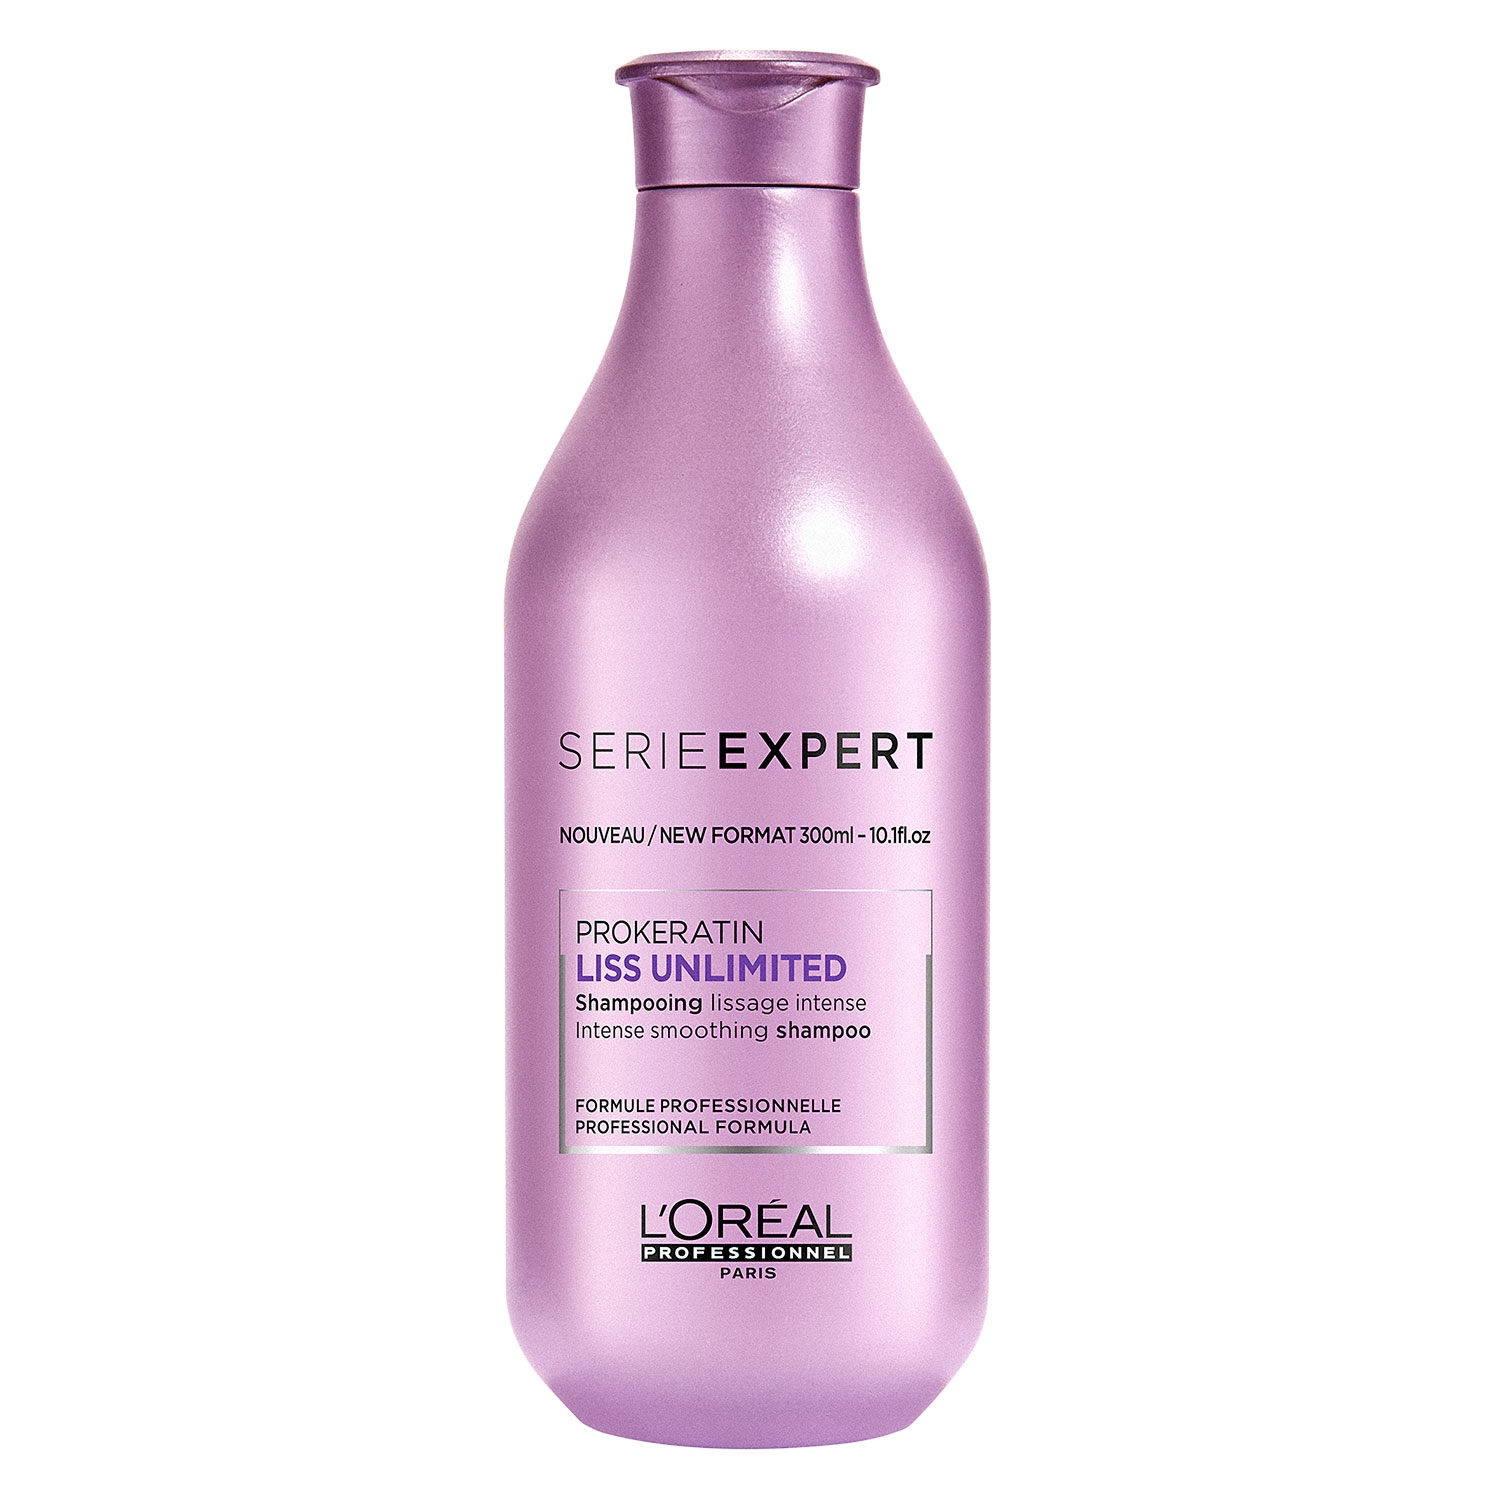 Produktbild von Série Expert Liss Unlimited - Shampoo